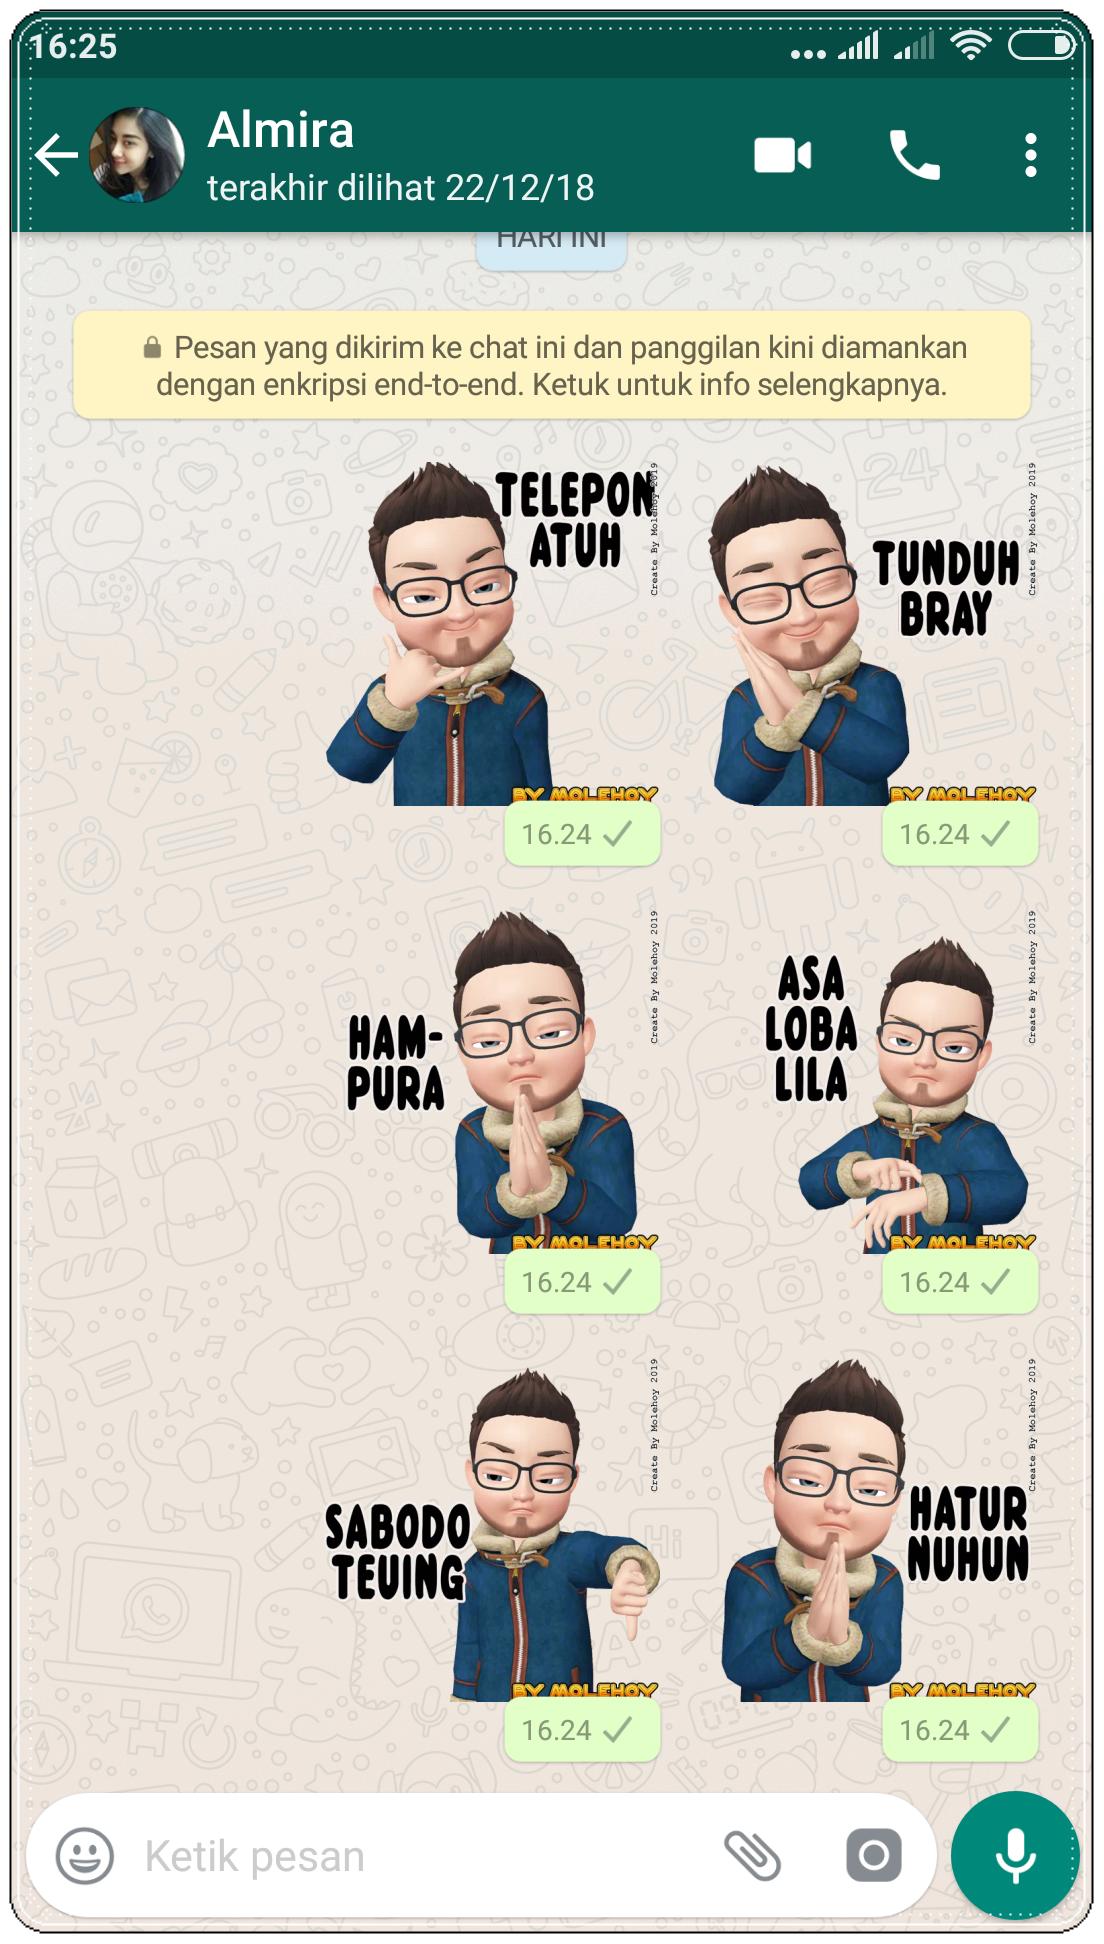 Sunda Stiker Lucu Wastickerapps For Android Apk Download